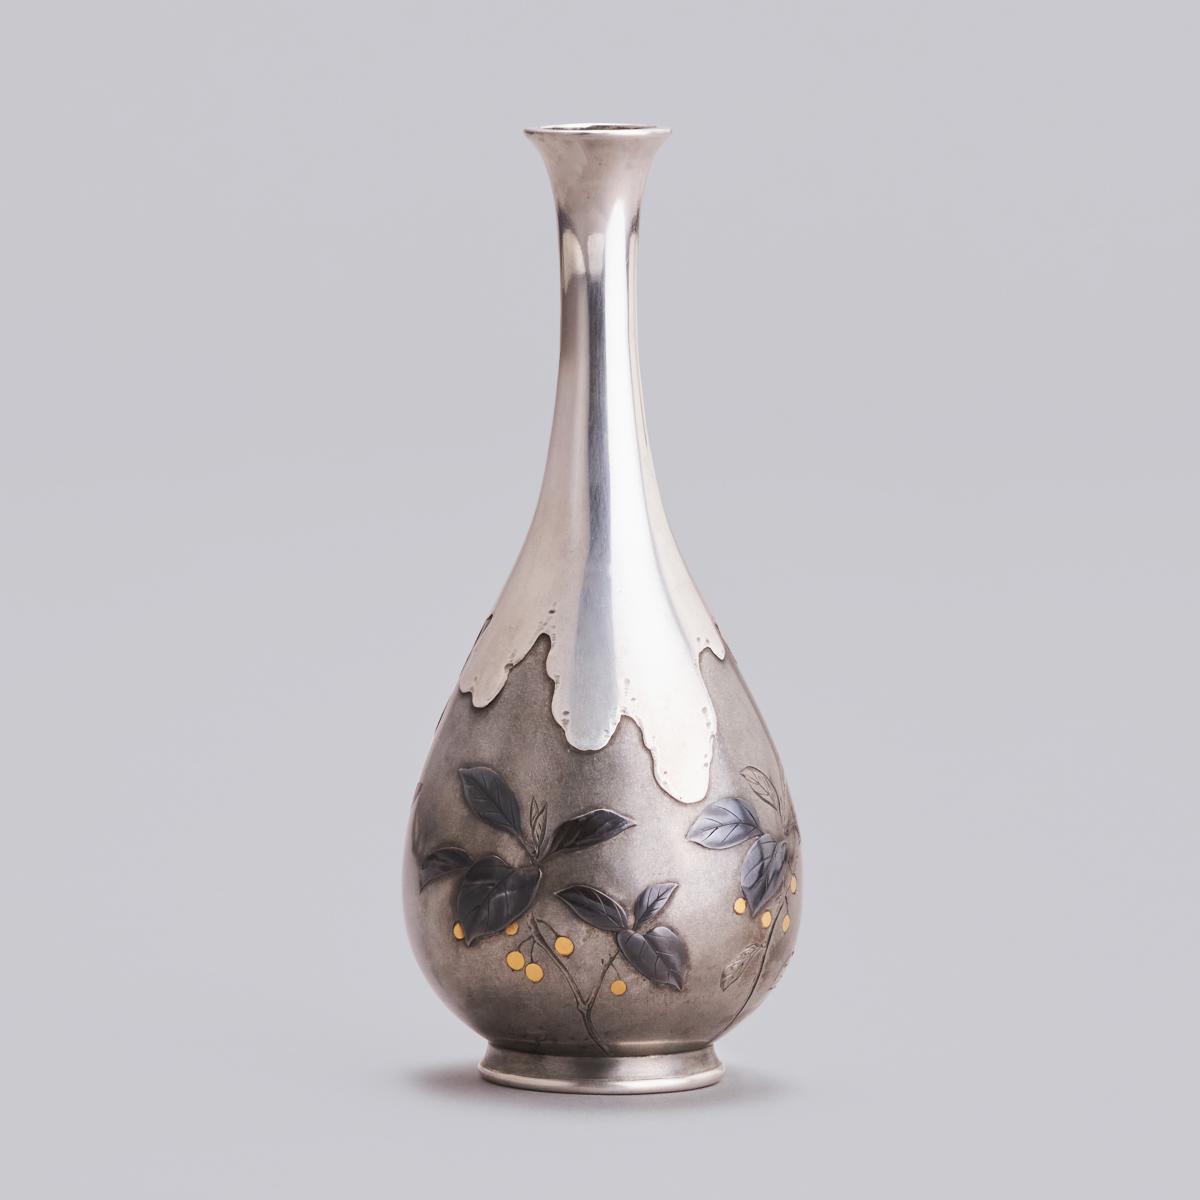 Japanese silver and shibuichi vase with a sparrow signed Masachika, Taisho Period